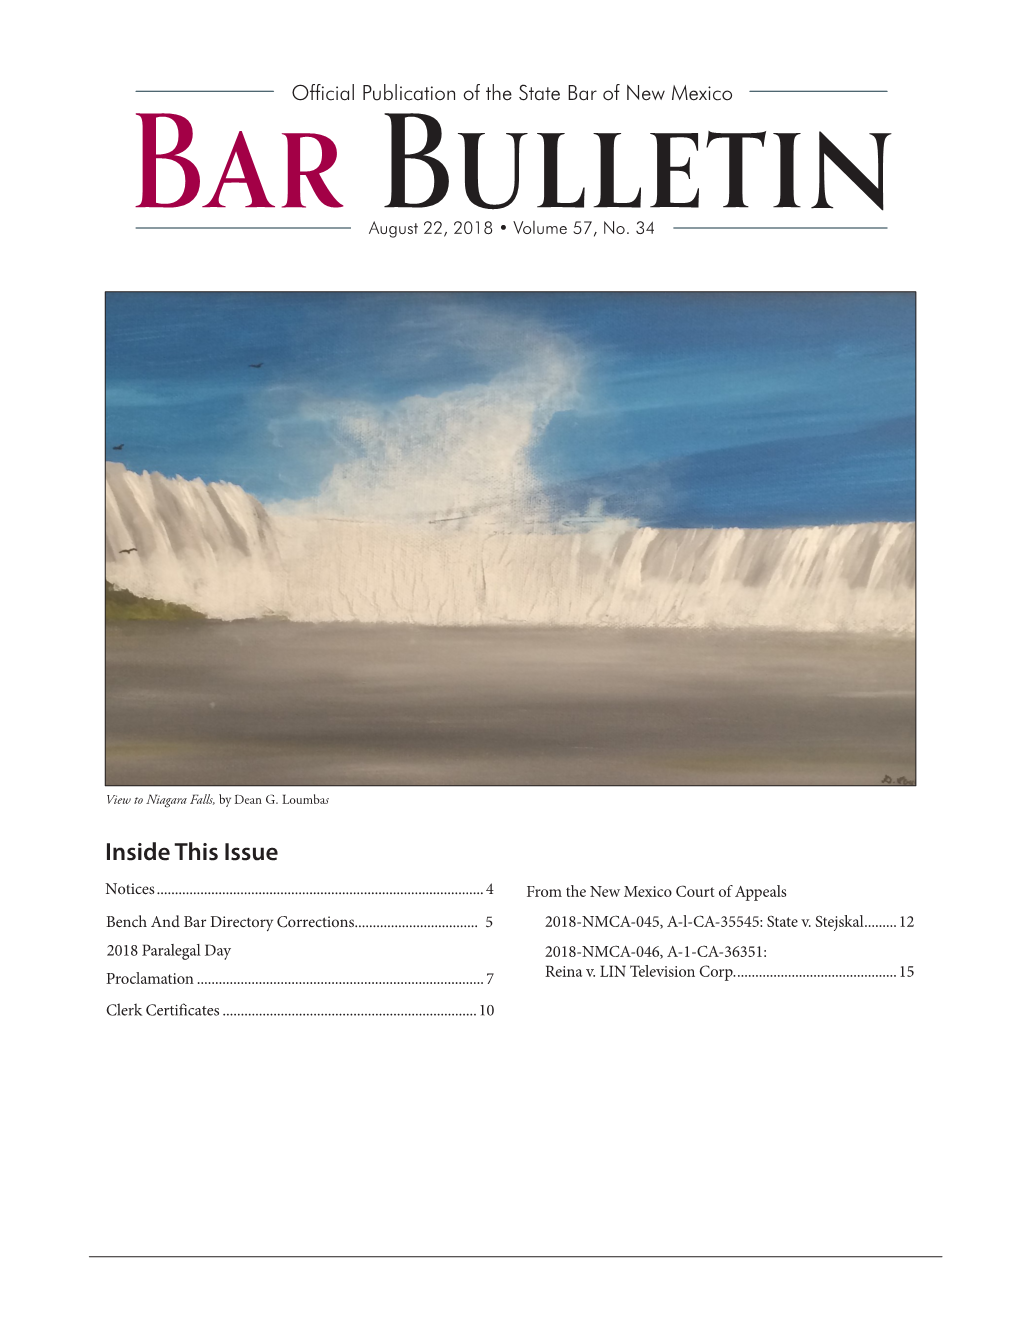 Bar Bulletin - August 22, 2018 - Volume 57, No